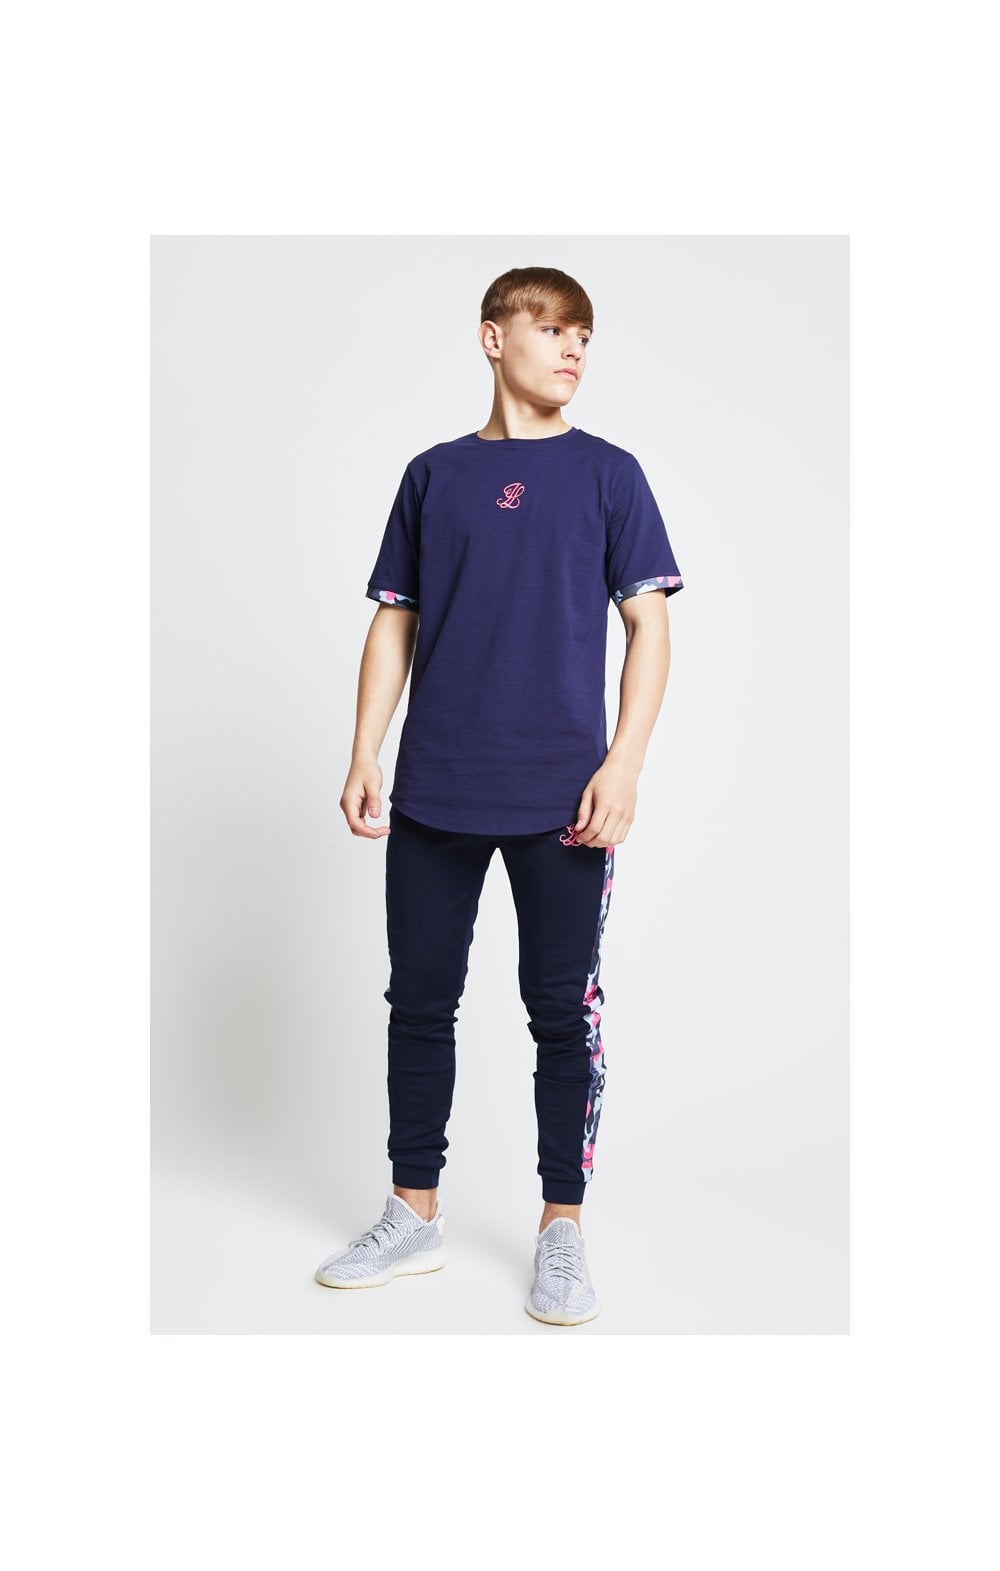 Illusive London T-Shirt Kontrast Saum - Marineblau und Neon Rosa Camouflage (3)